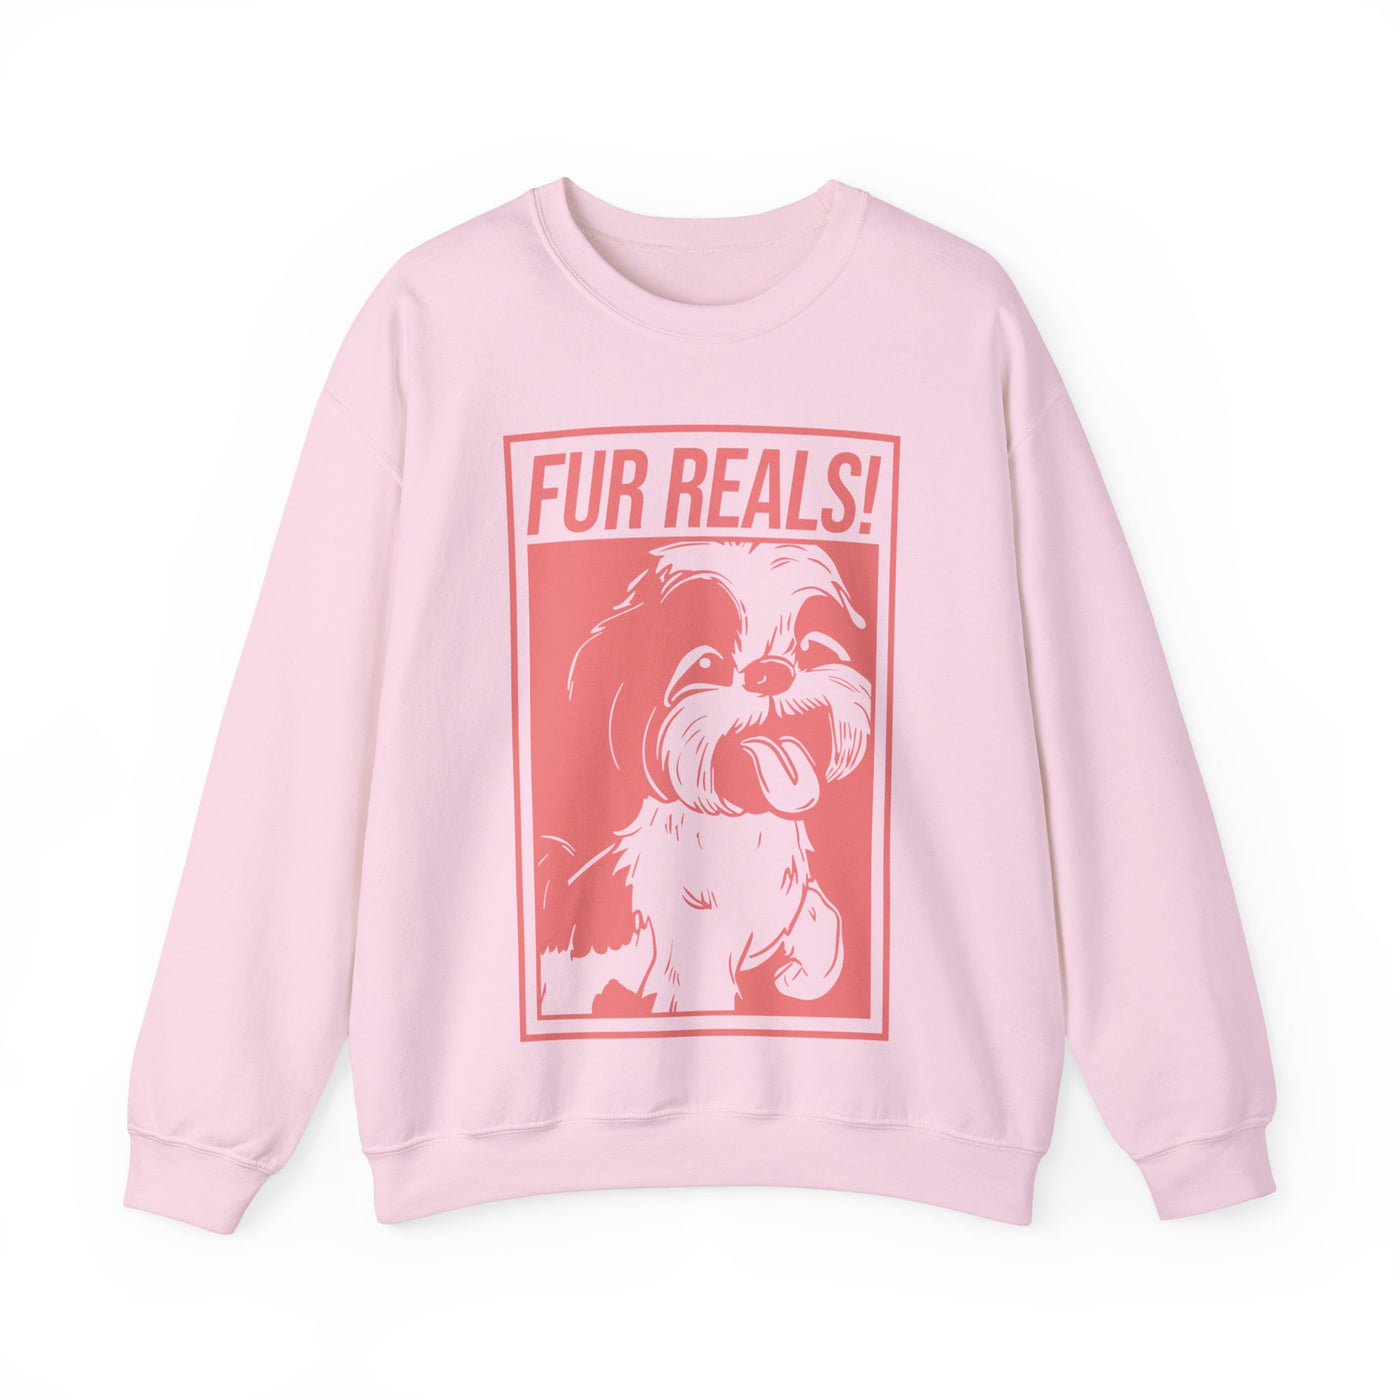 Fur Real Shih Tzu Colored Print Sweatshirt